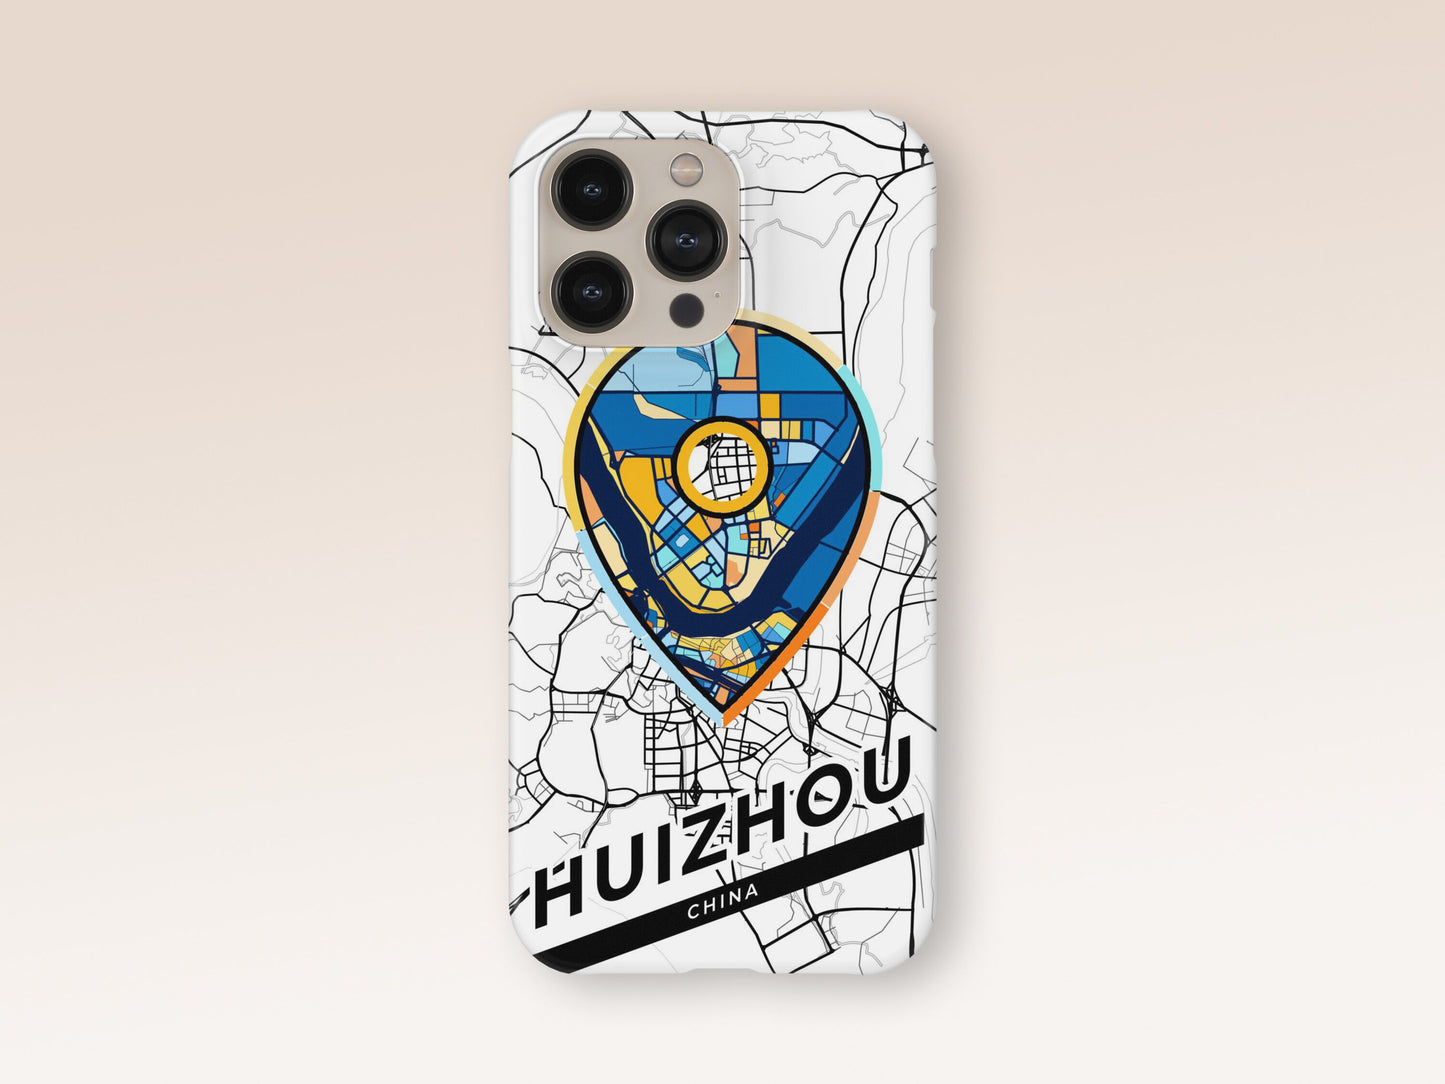 Huizhou China slim phone case with colorful icon. Birthday, wedding or housewarming gift. Couple match cases. 1